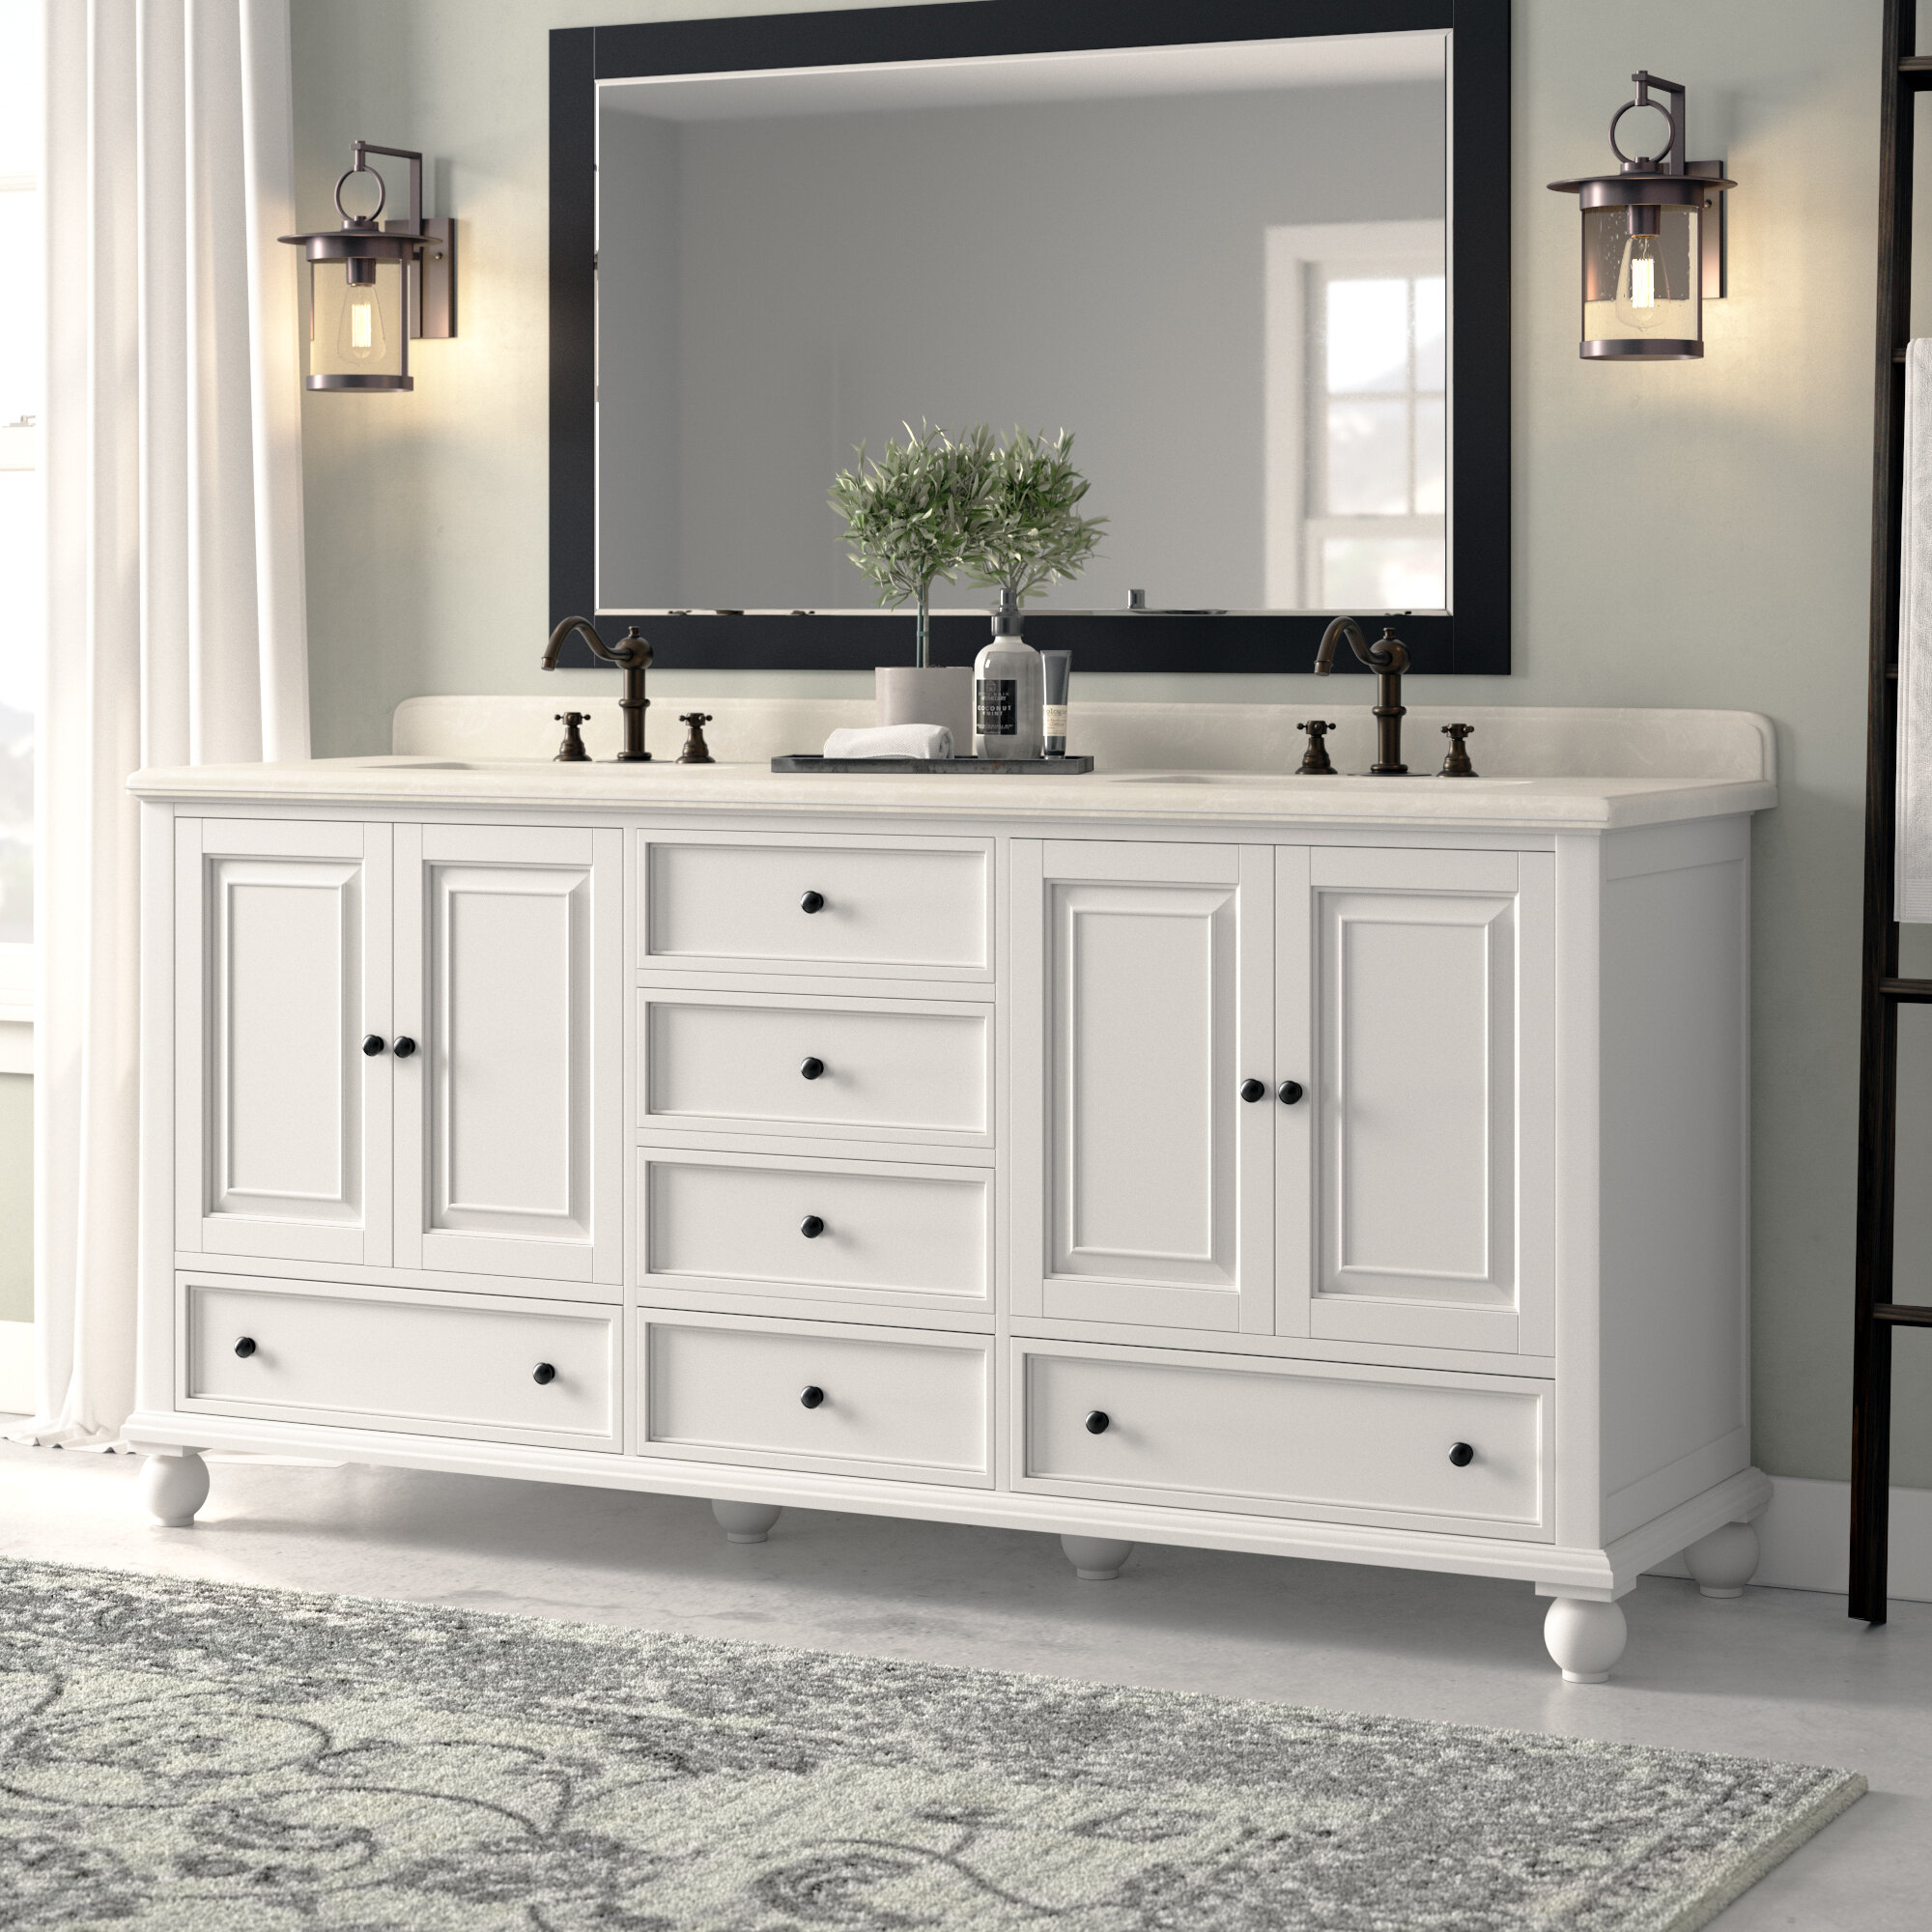 Gracie Oaks Samoset 72 Double Bathroom Vanity Base Only Reviews Wayfair